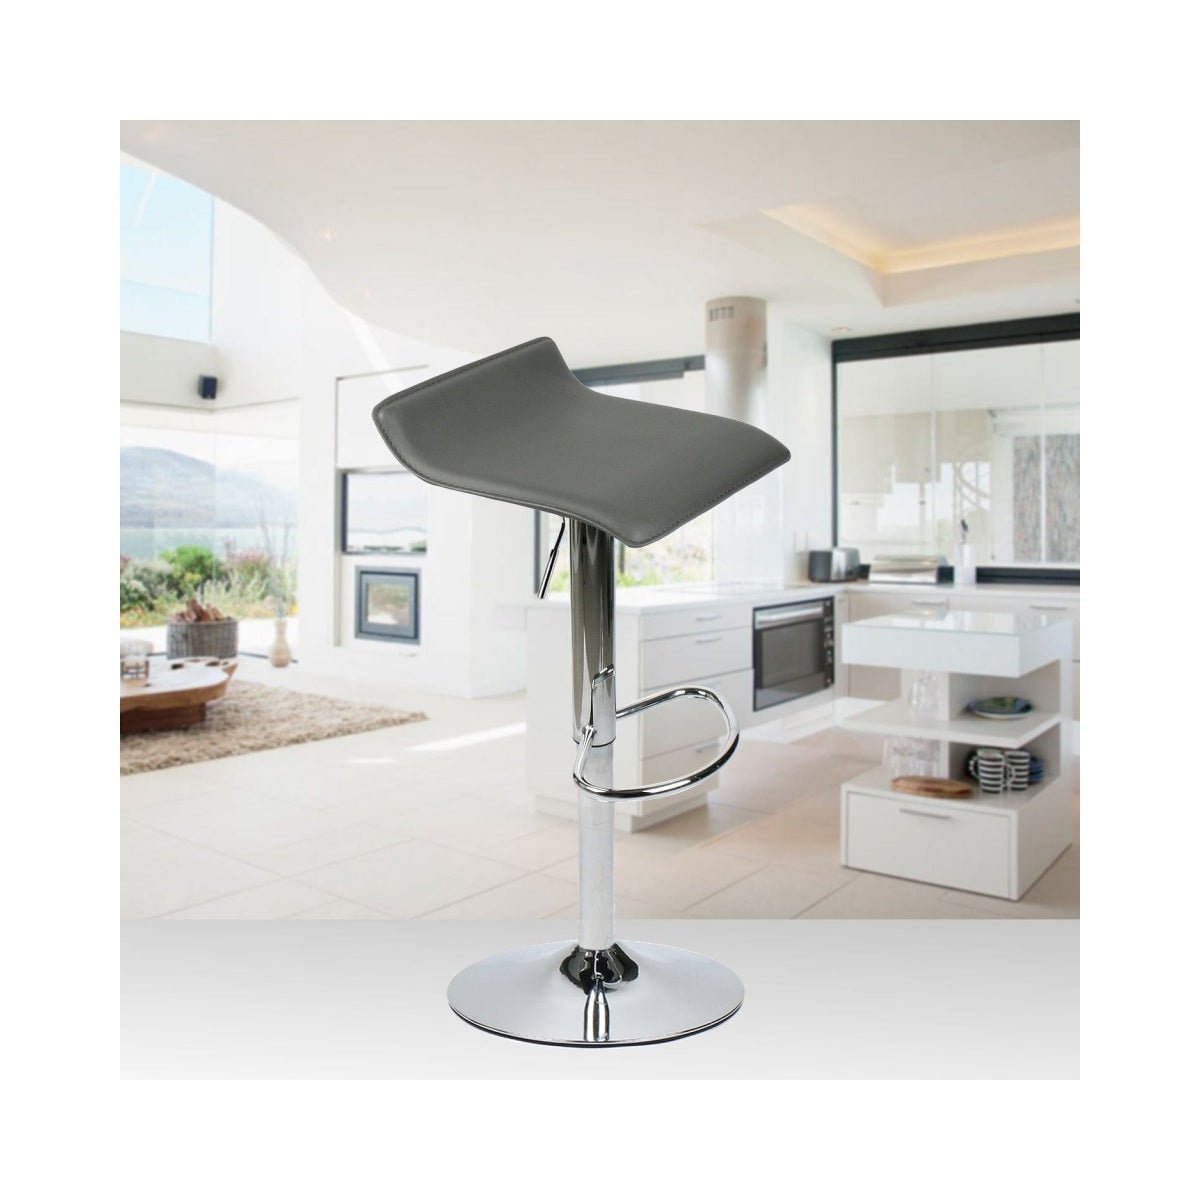 Elecwish grey bar stool OW002 display scene